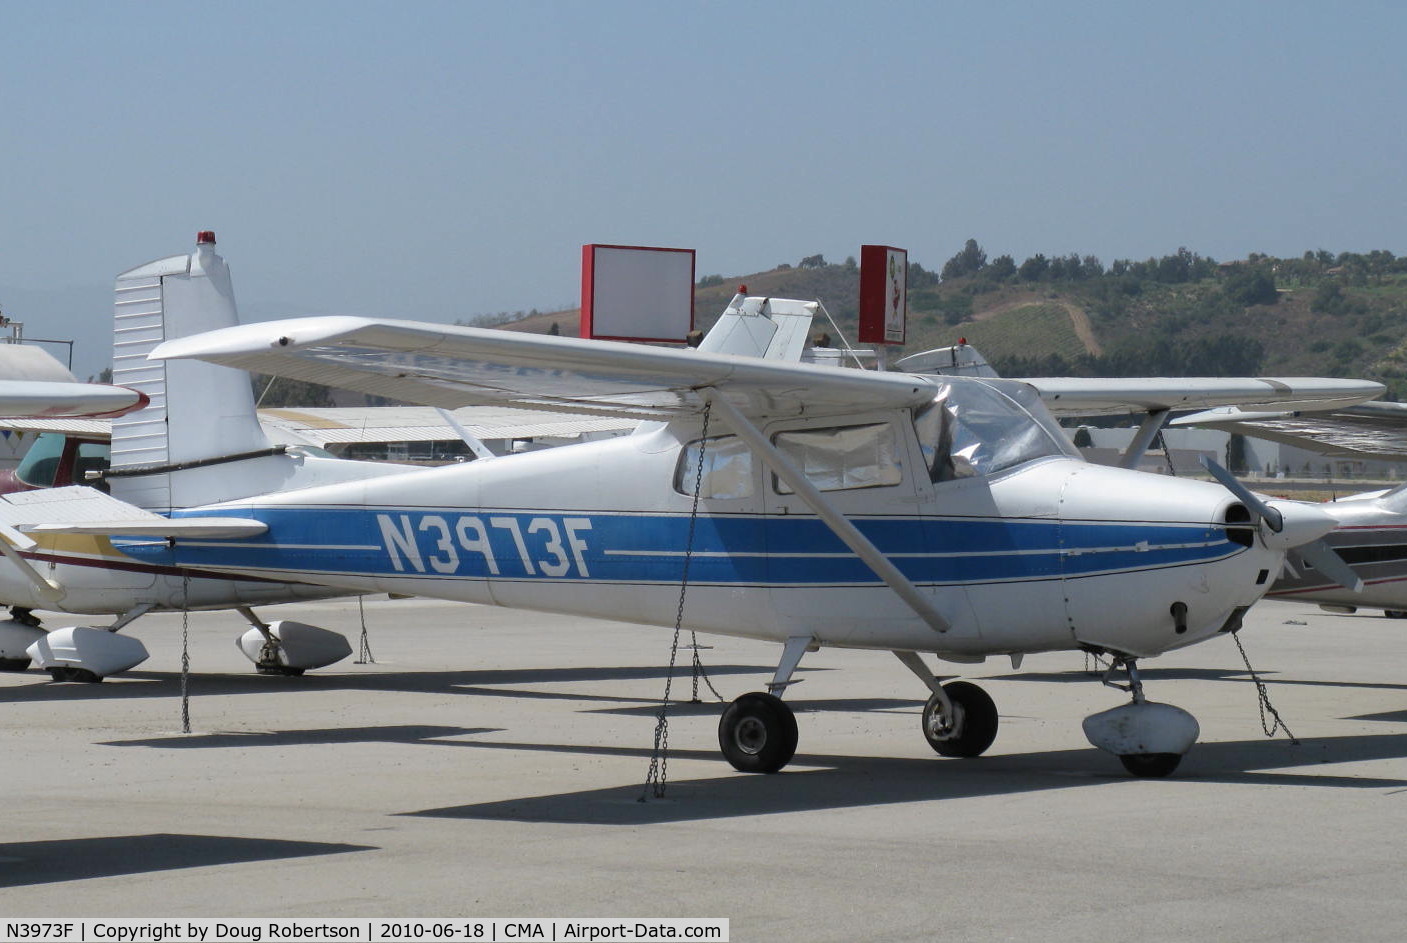 N3973F, 1958 Cessna 172 C/N 36873, 1958 Cessna 172, Continental O-300 145 Hp